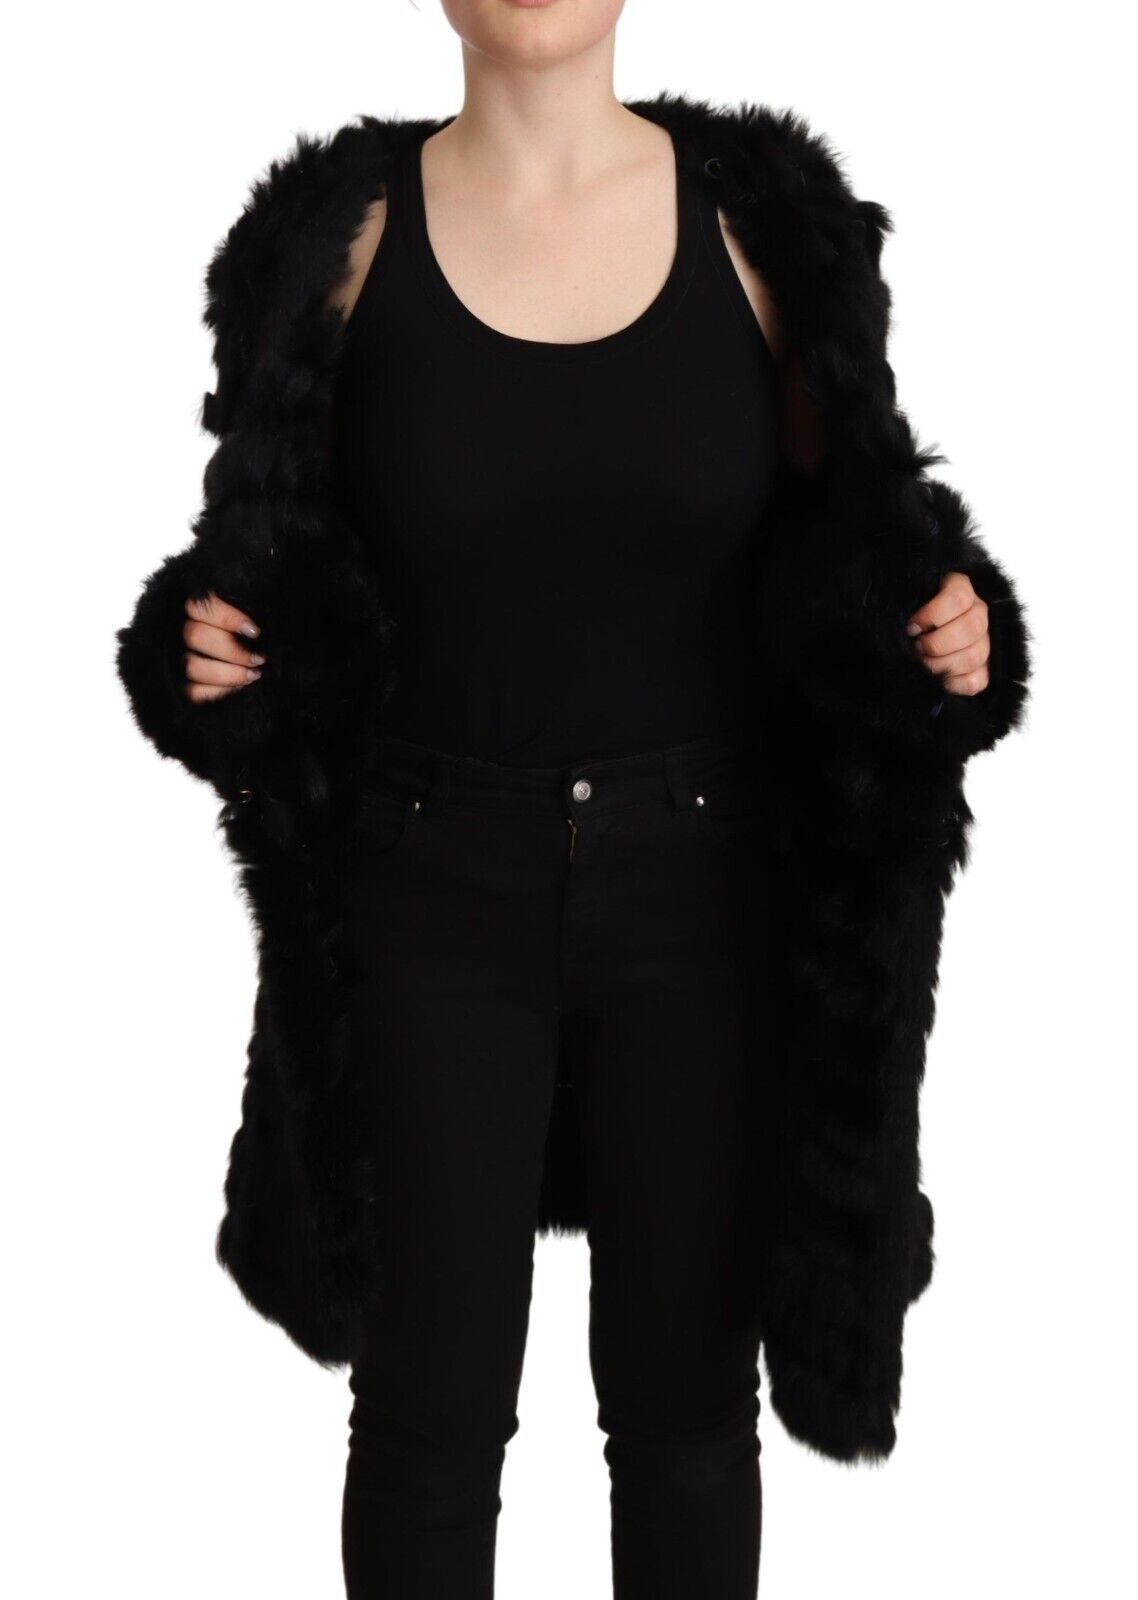 Just Cavalli Black Rabbit Fur Cardigan Long Sleeves Jacket